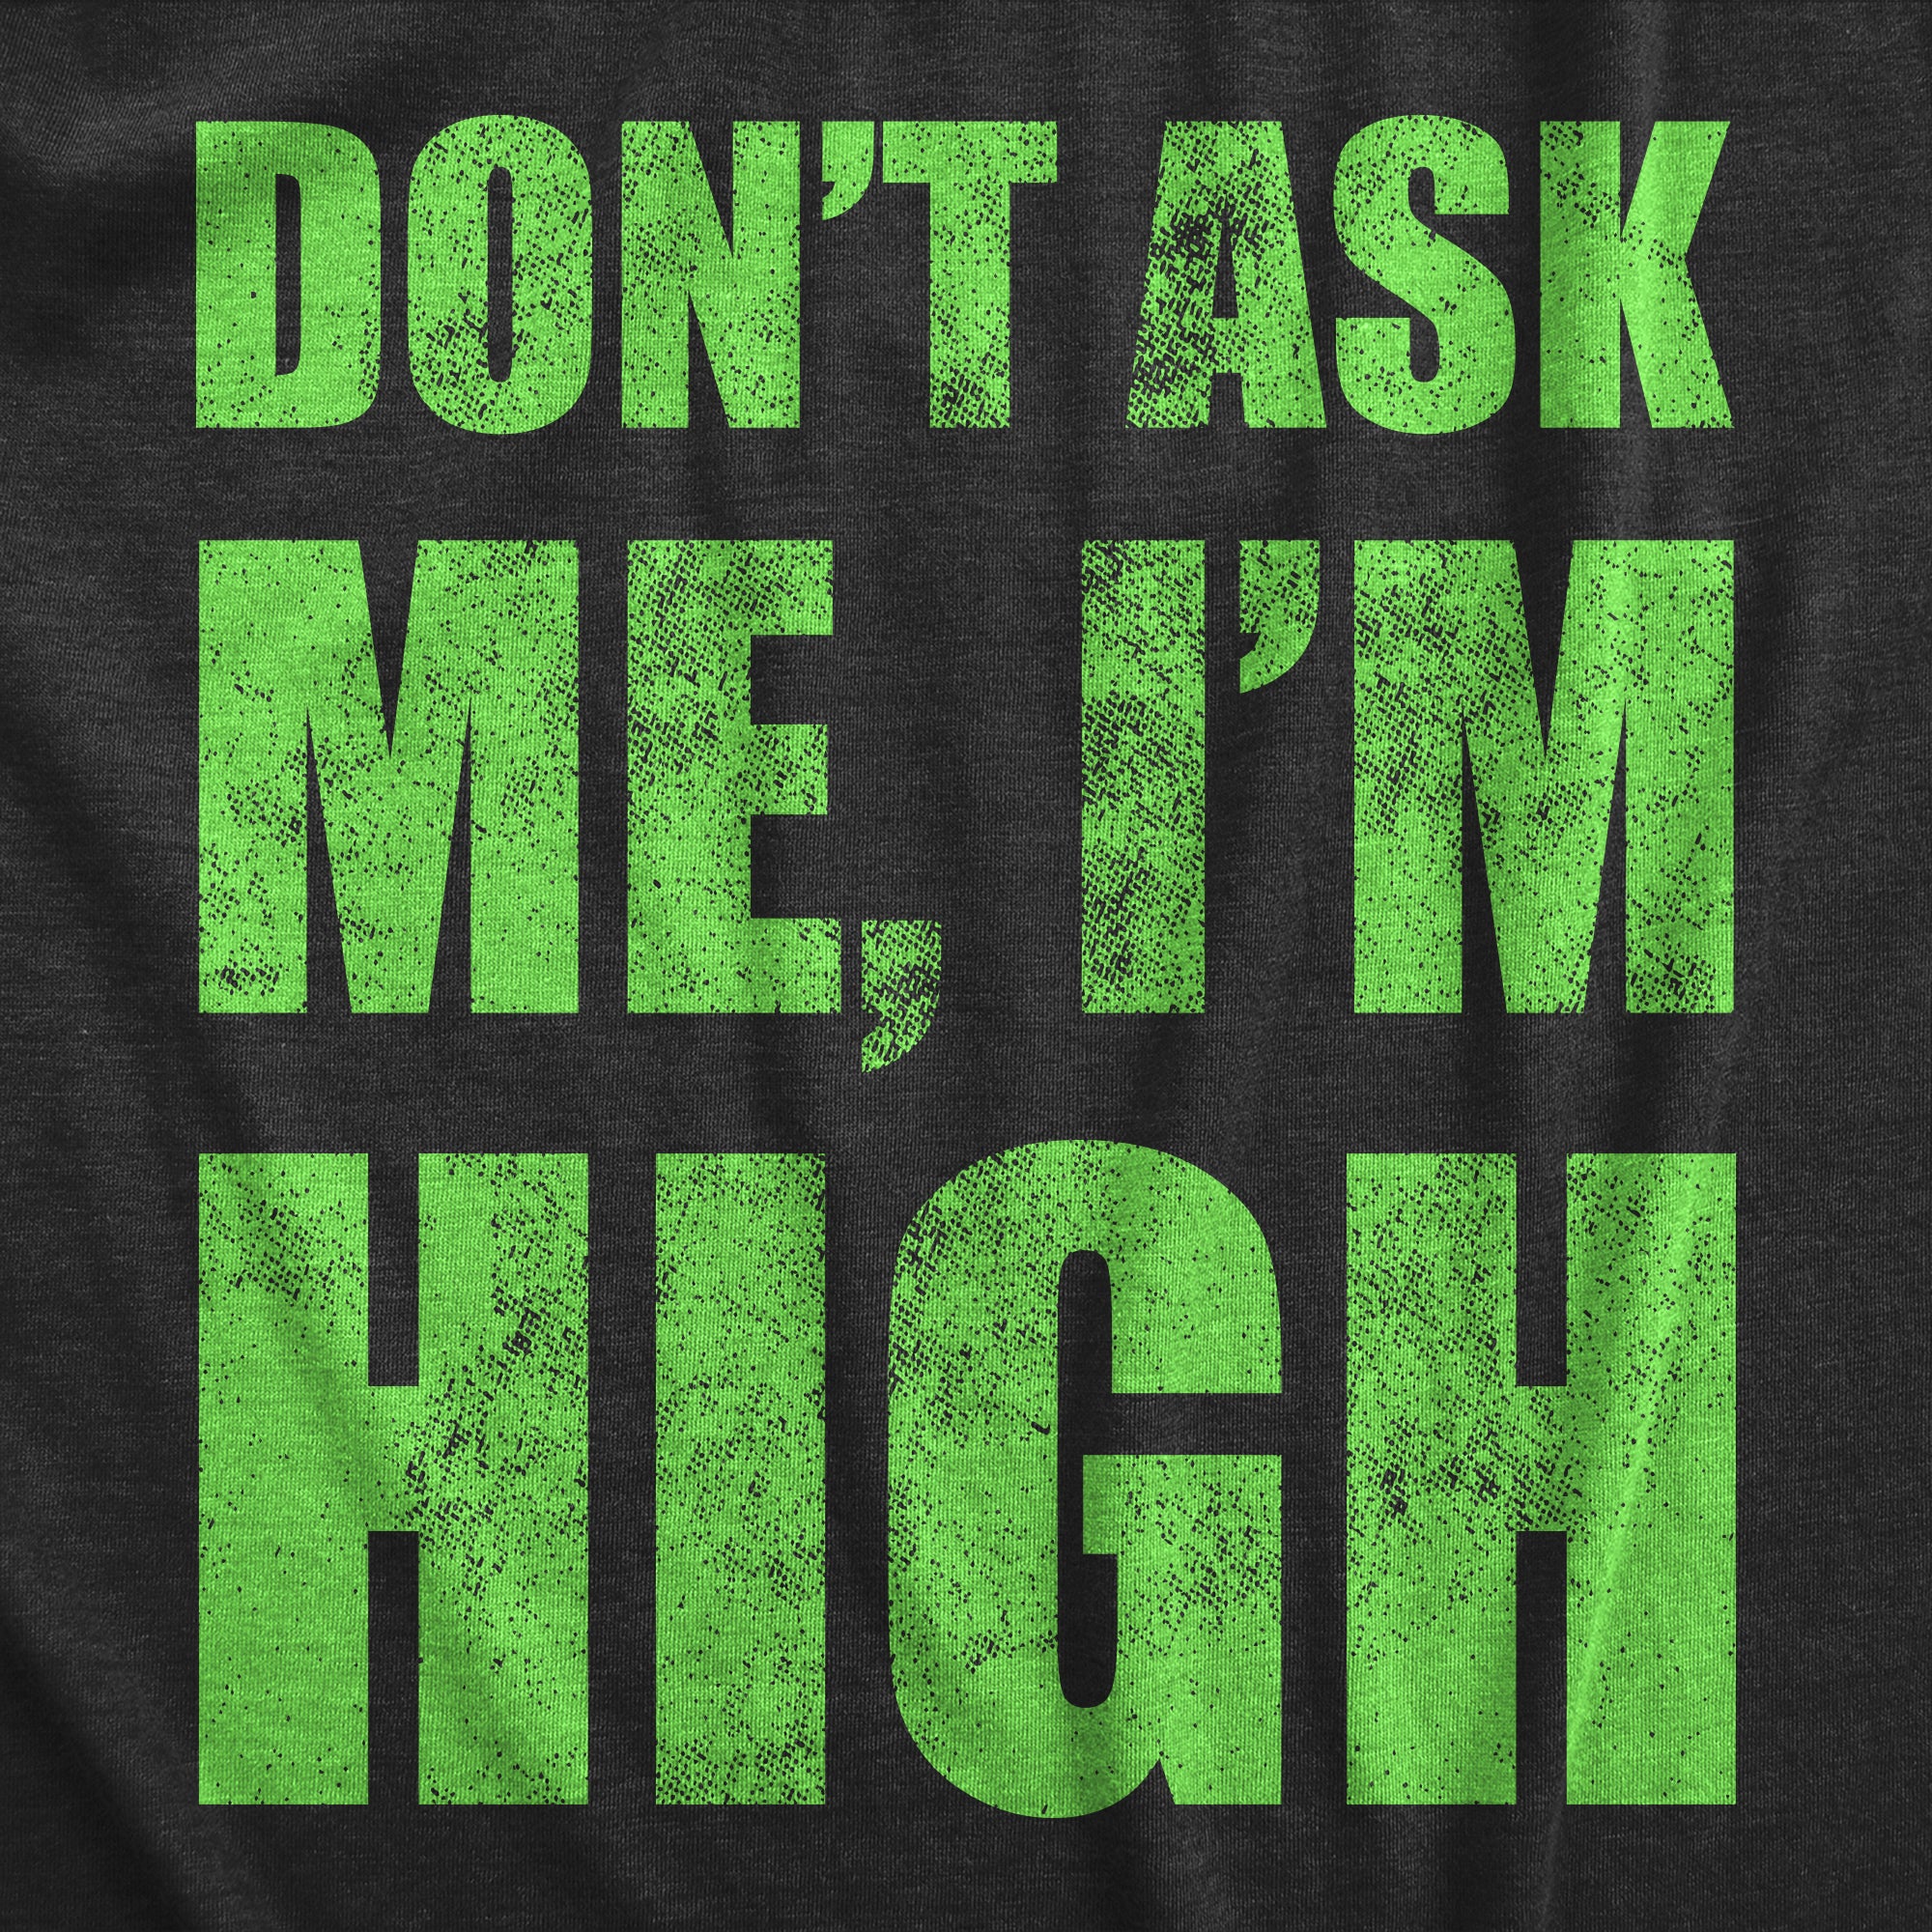 Funny Heather Black - HIGH Dont Ask Me Im High Mens T Shirt Nerdy 420 Tee